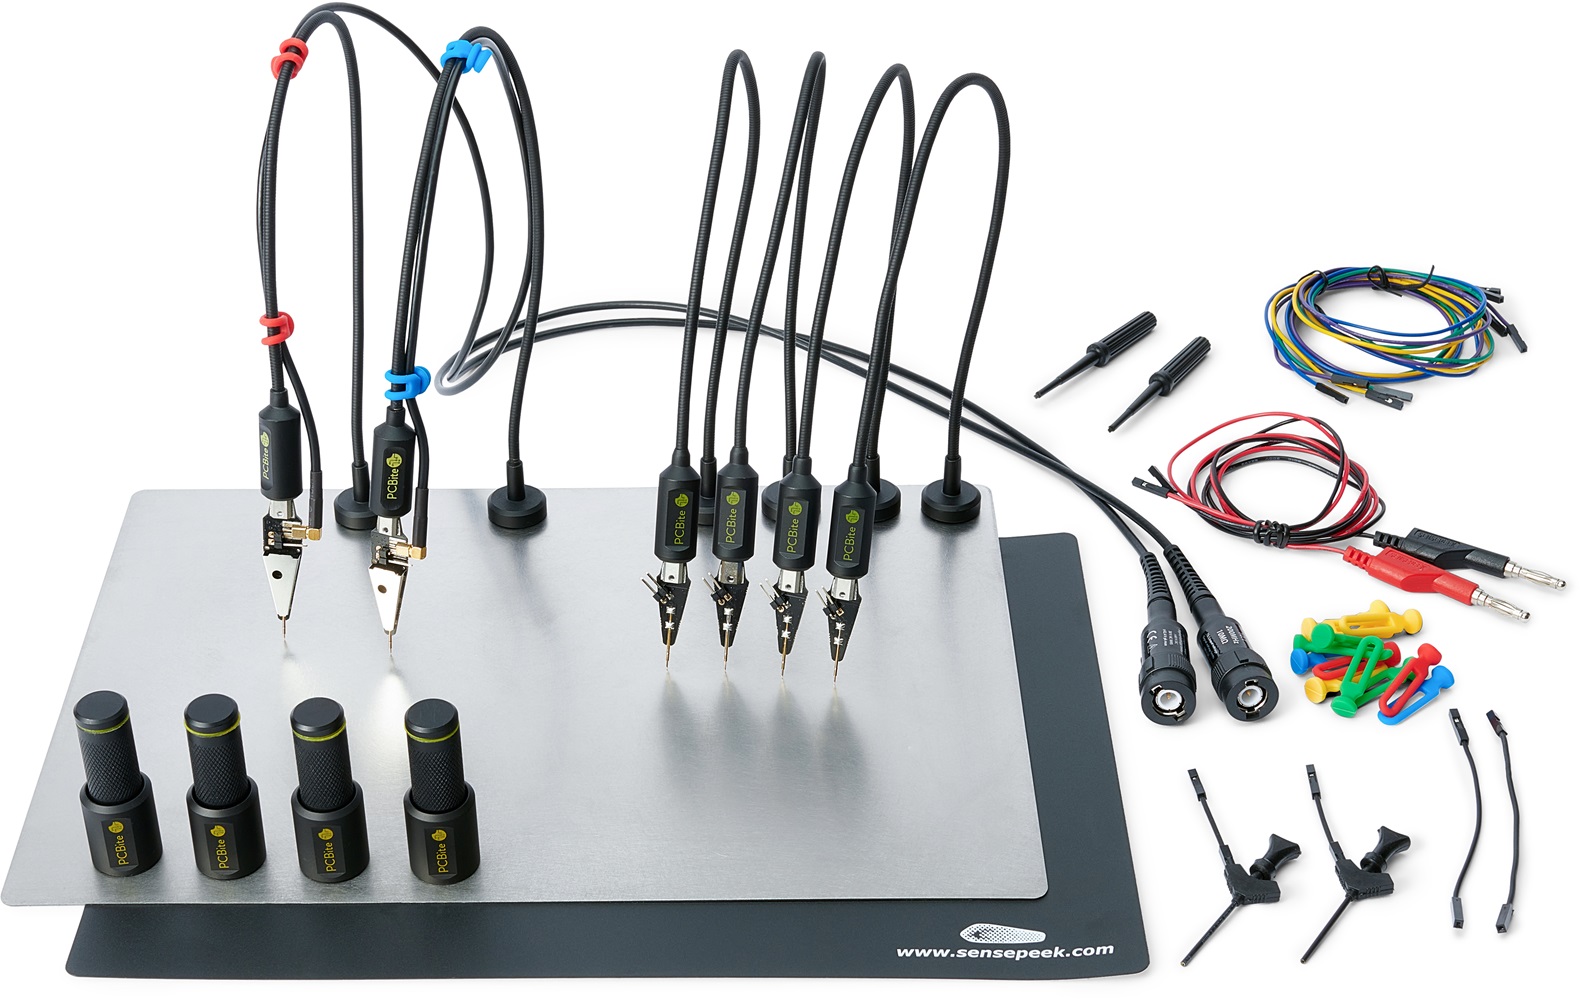 Brand New 40 MHz 2 Pcs Probe for USB Oscilloscope Testing Tool FREE SHIPPING 